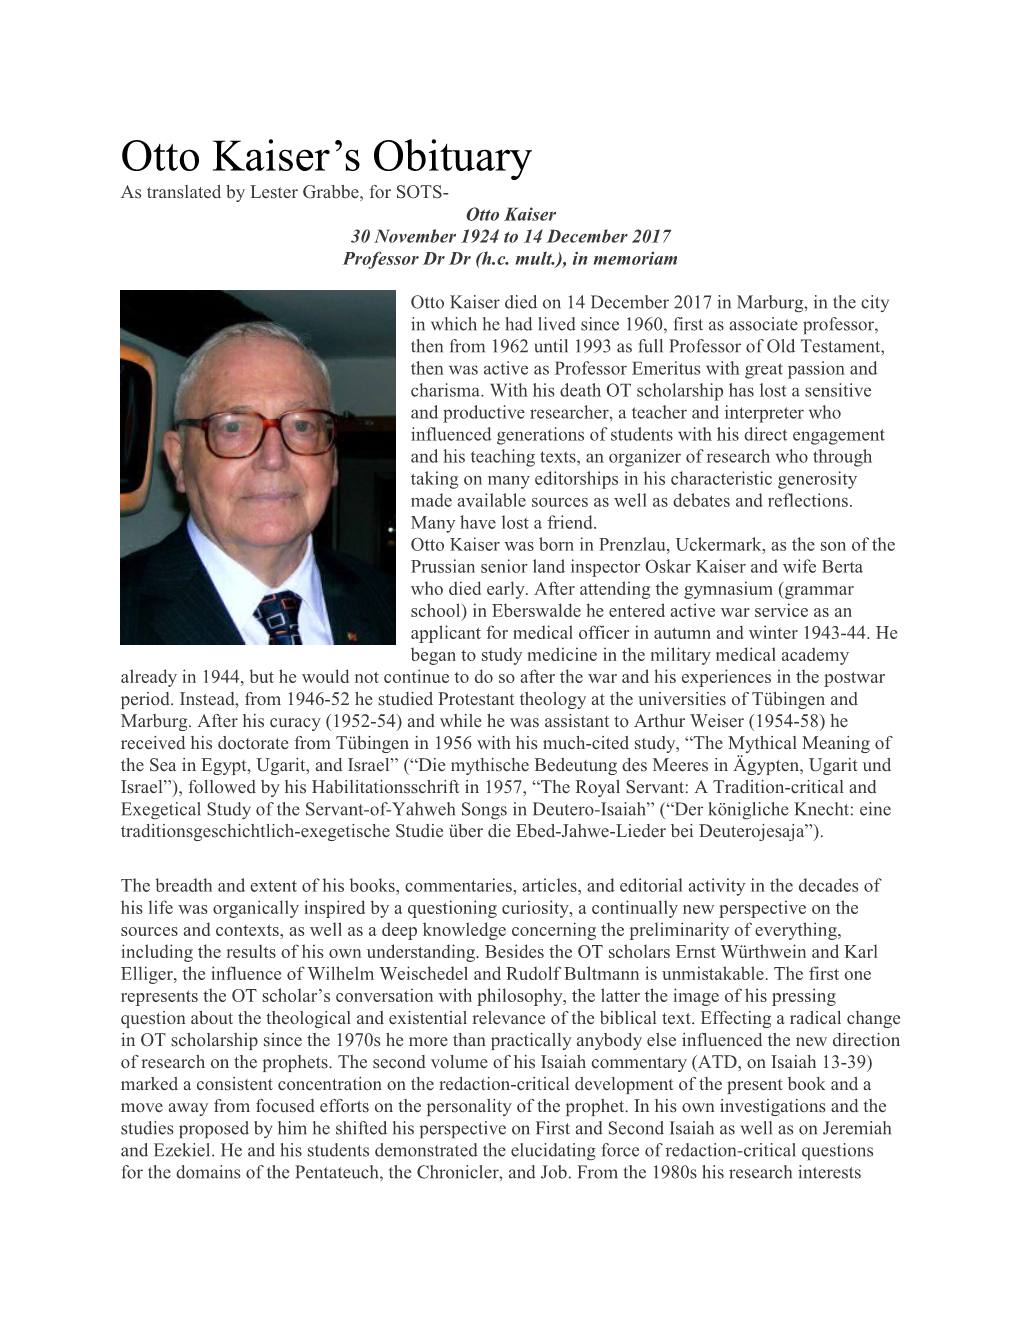 Otto Kaiser’S Obituary As Translated by Lester Grabbe, for SOTS- Otto Kaiser 30 November 1924 to 14 December 2017 Professor Dr Dr (H.C